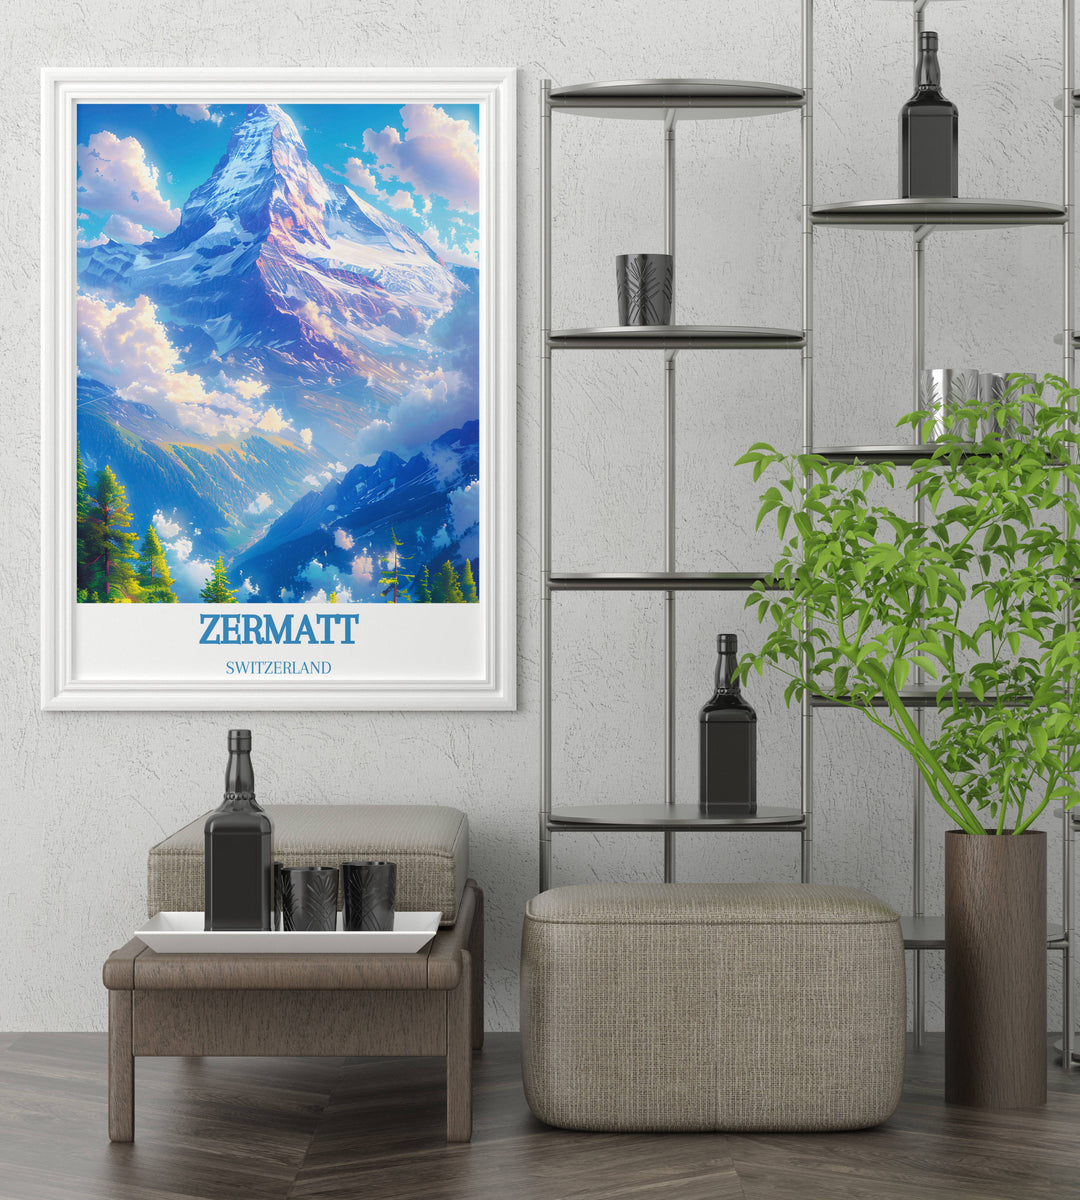 Elegant print of the Matterhorn, capturing its distinctive pyramid shape and the serene winter landscape of Zermatt, ideal for enhancing your home decor.